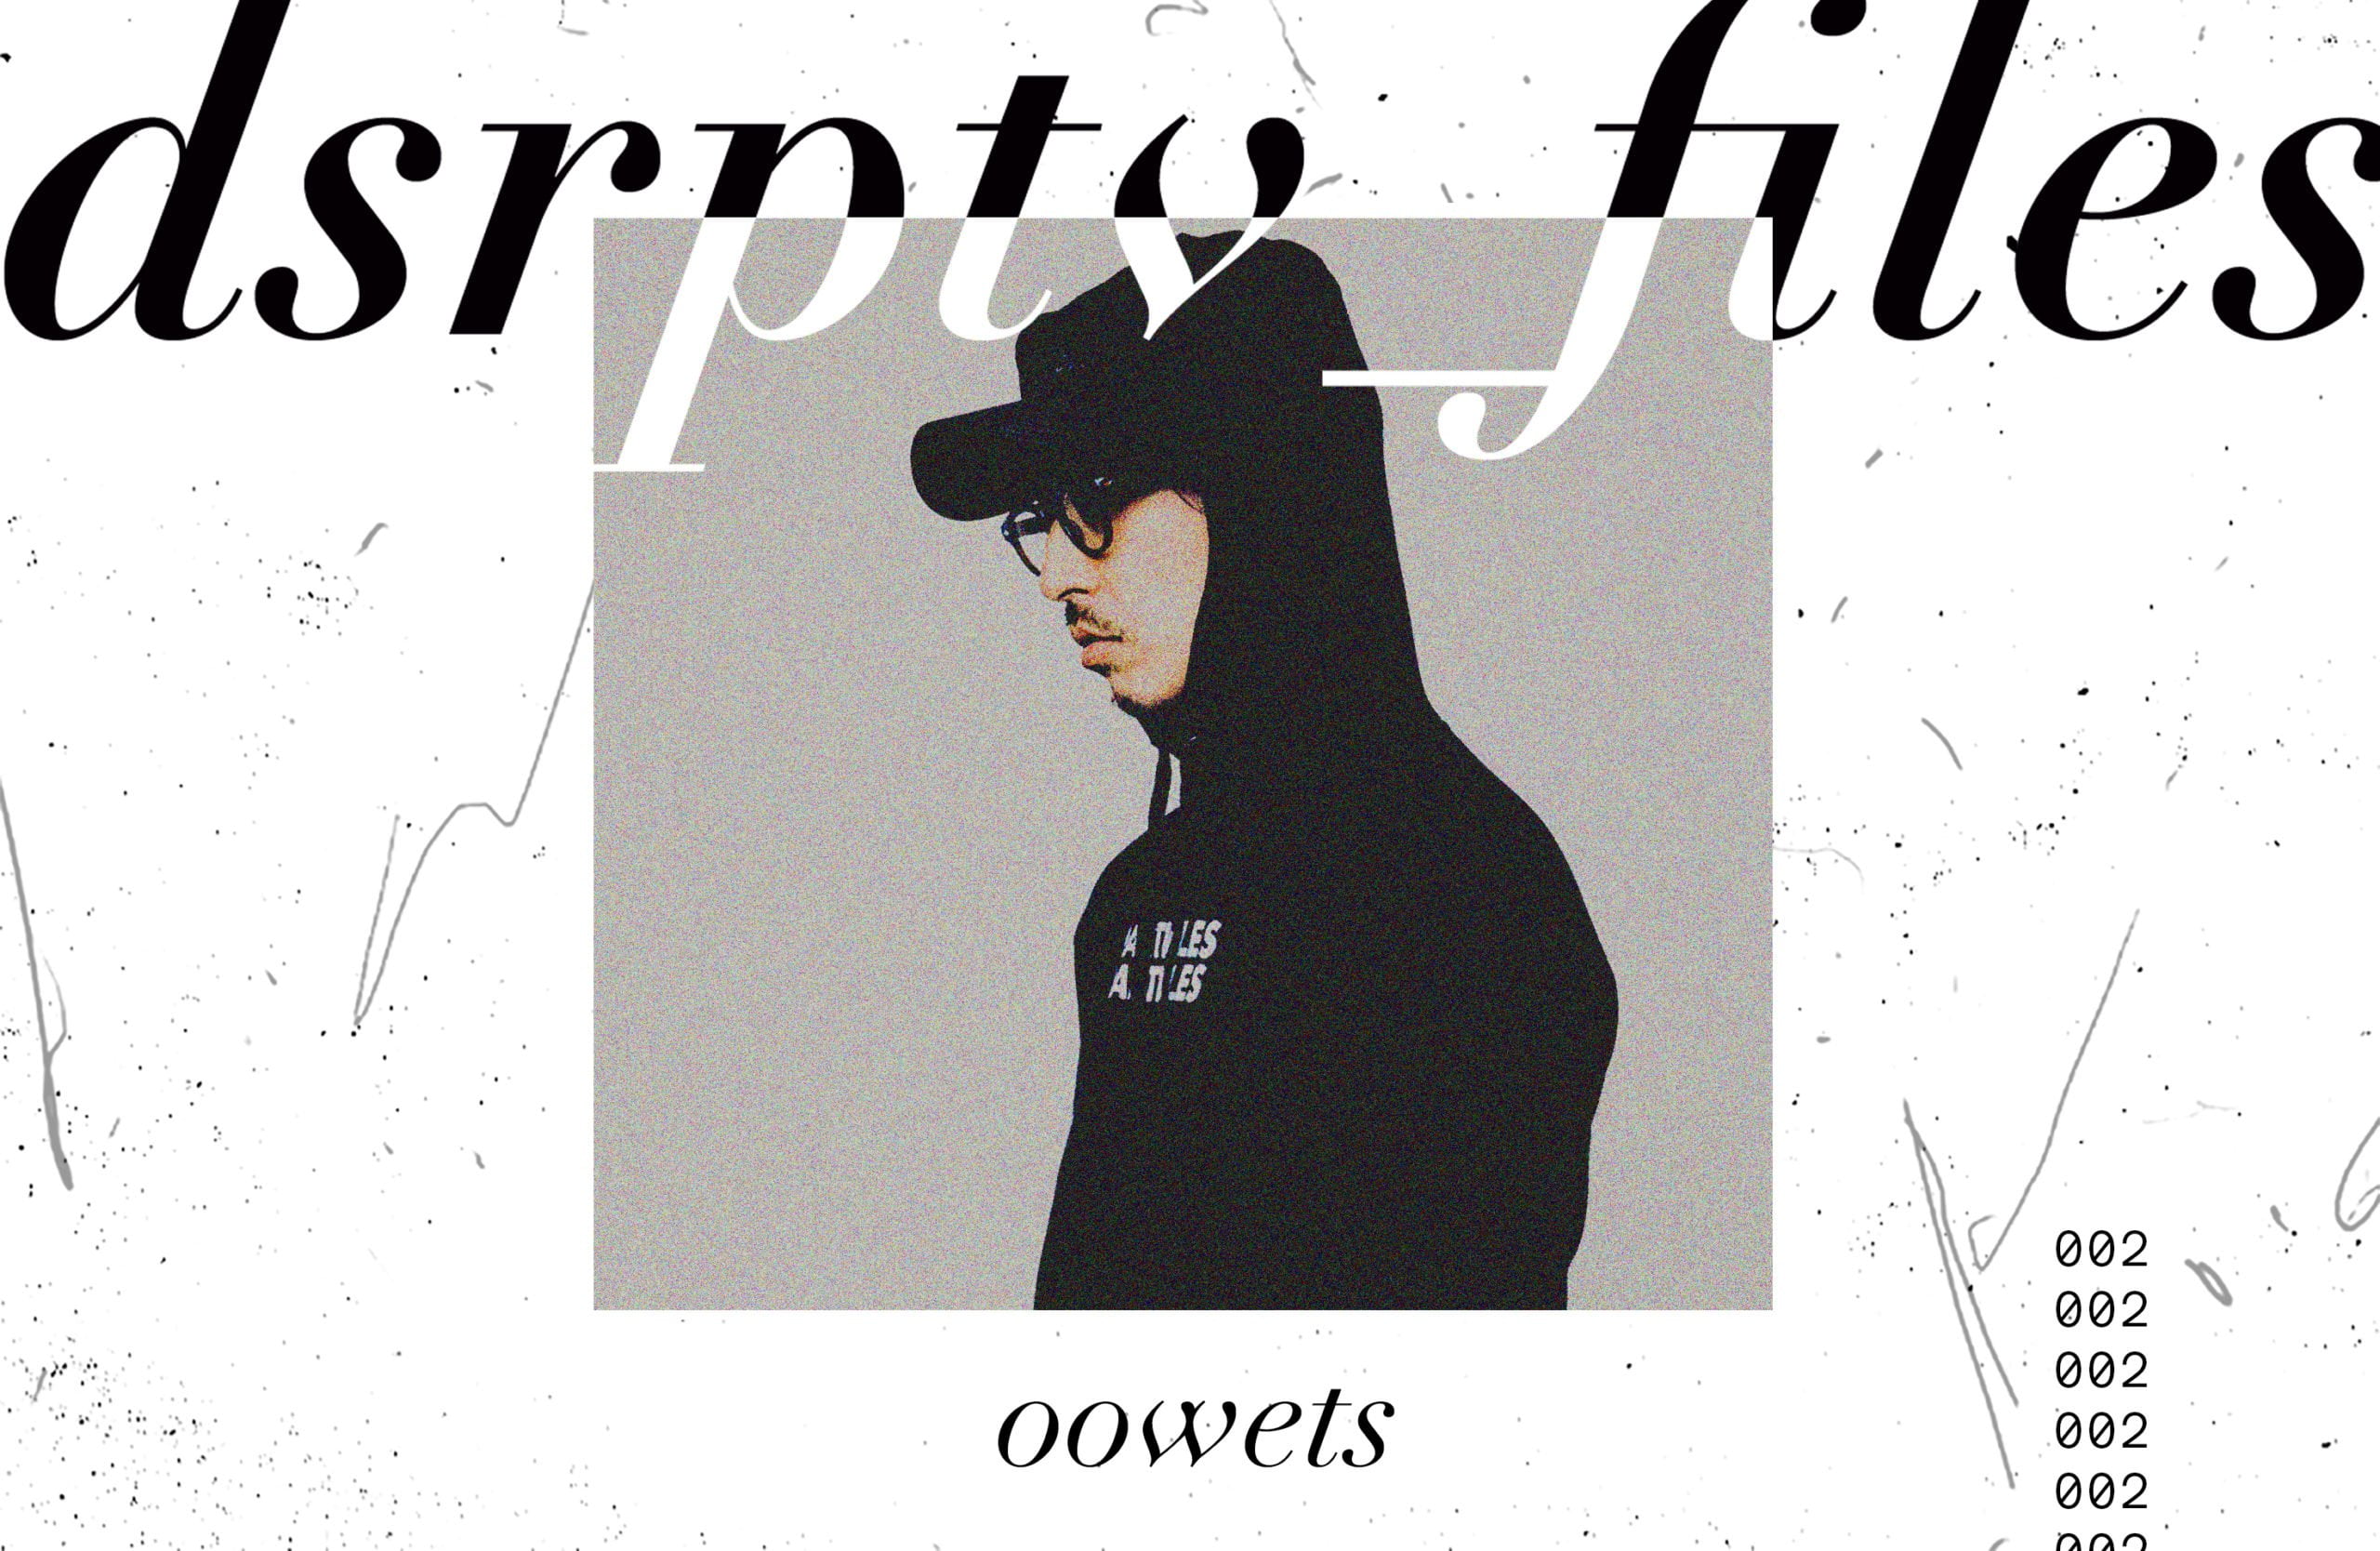 dsrptv_files – oowets